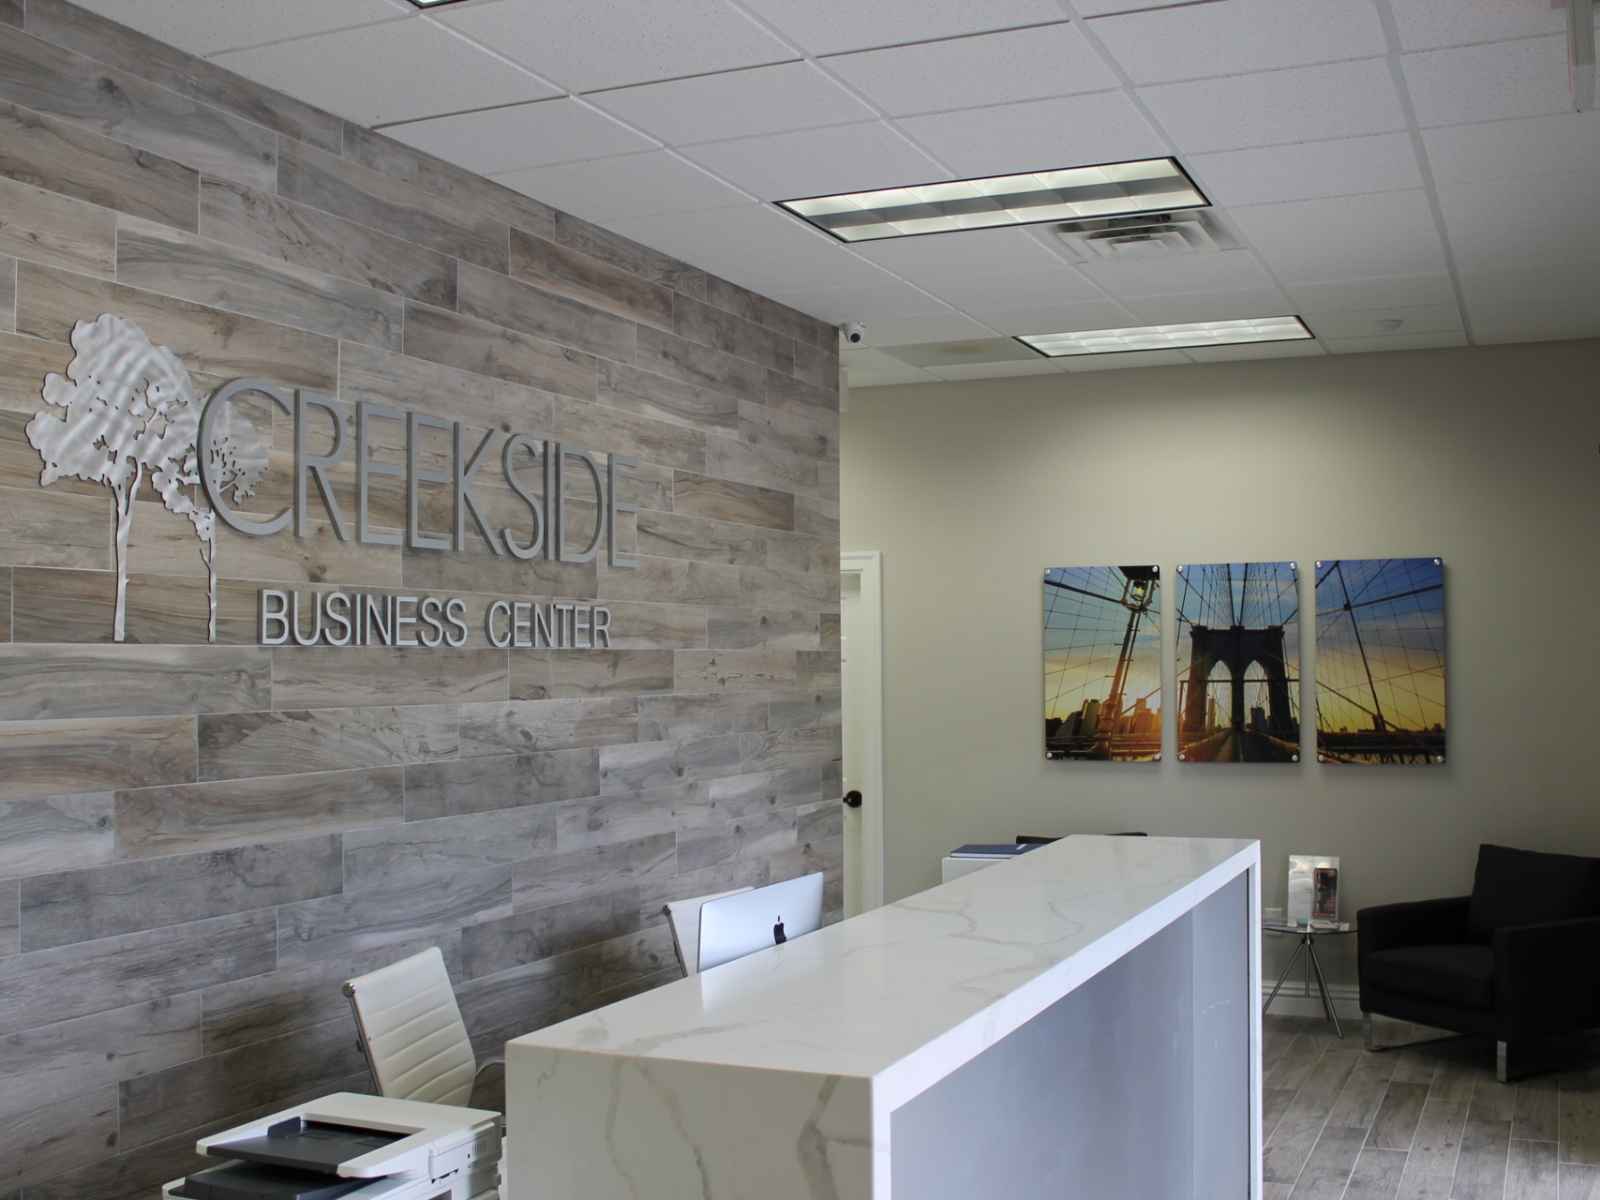 Creekside-Business-Center-101